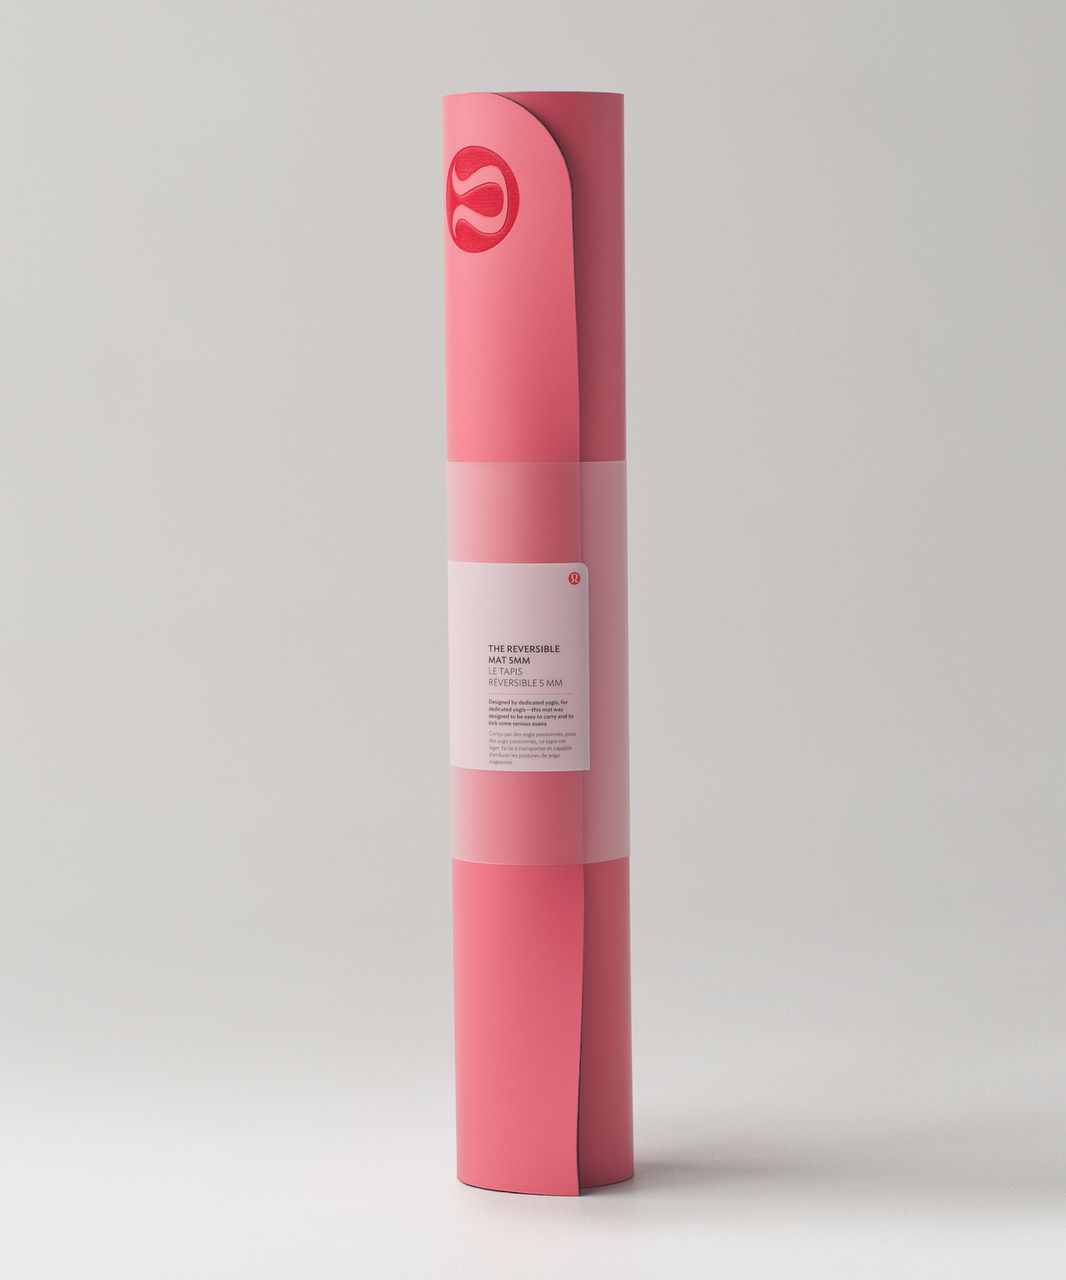 Lululemon The Reversible Mat 5mm - Pink Lemonade / Deep Coal